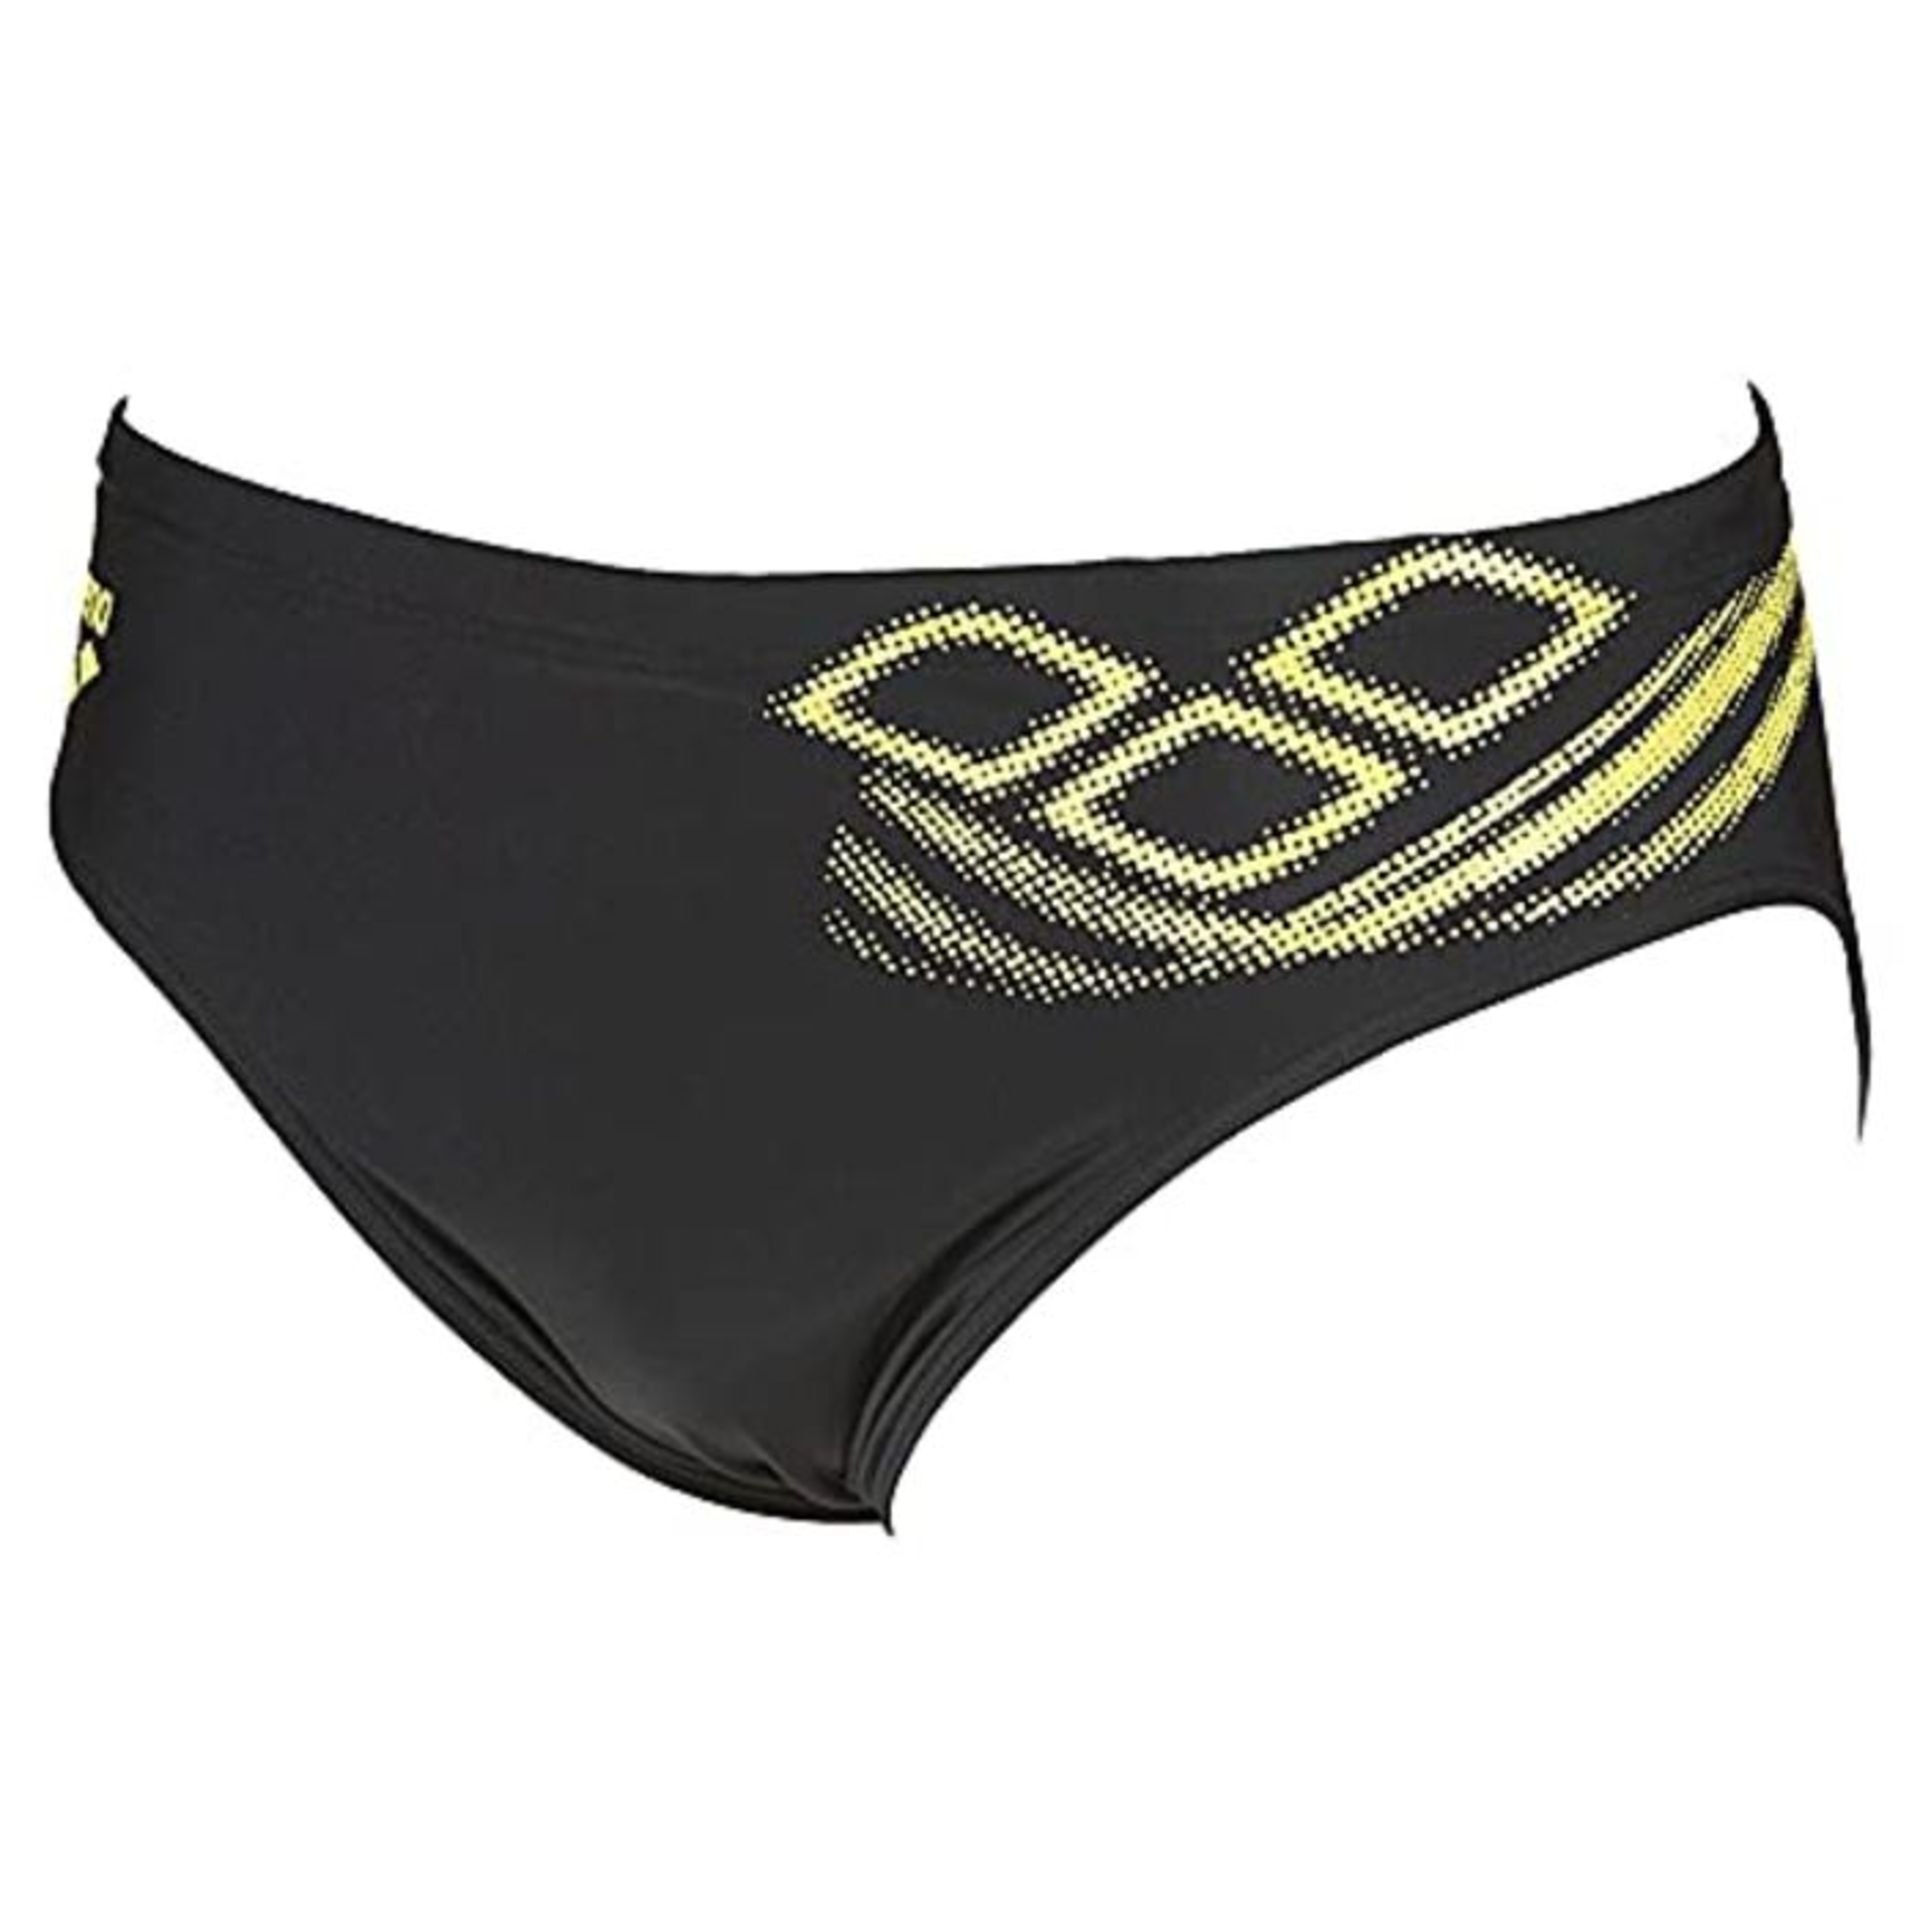 Arena M Spirit Brief - Men's Swimming Trunks, Black/Soft Green, Size 85, 30 - Image 3 of 4